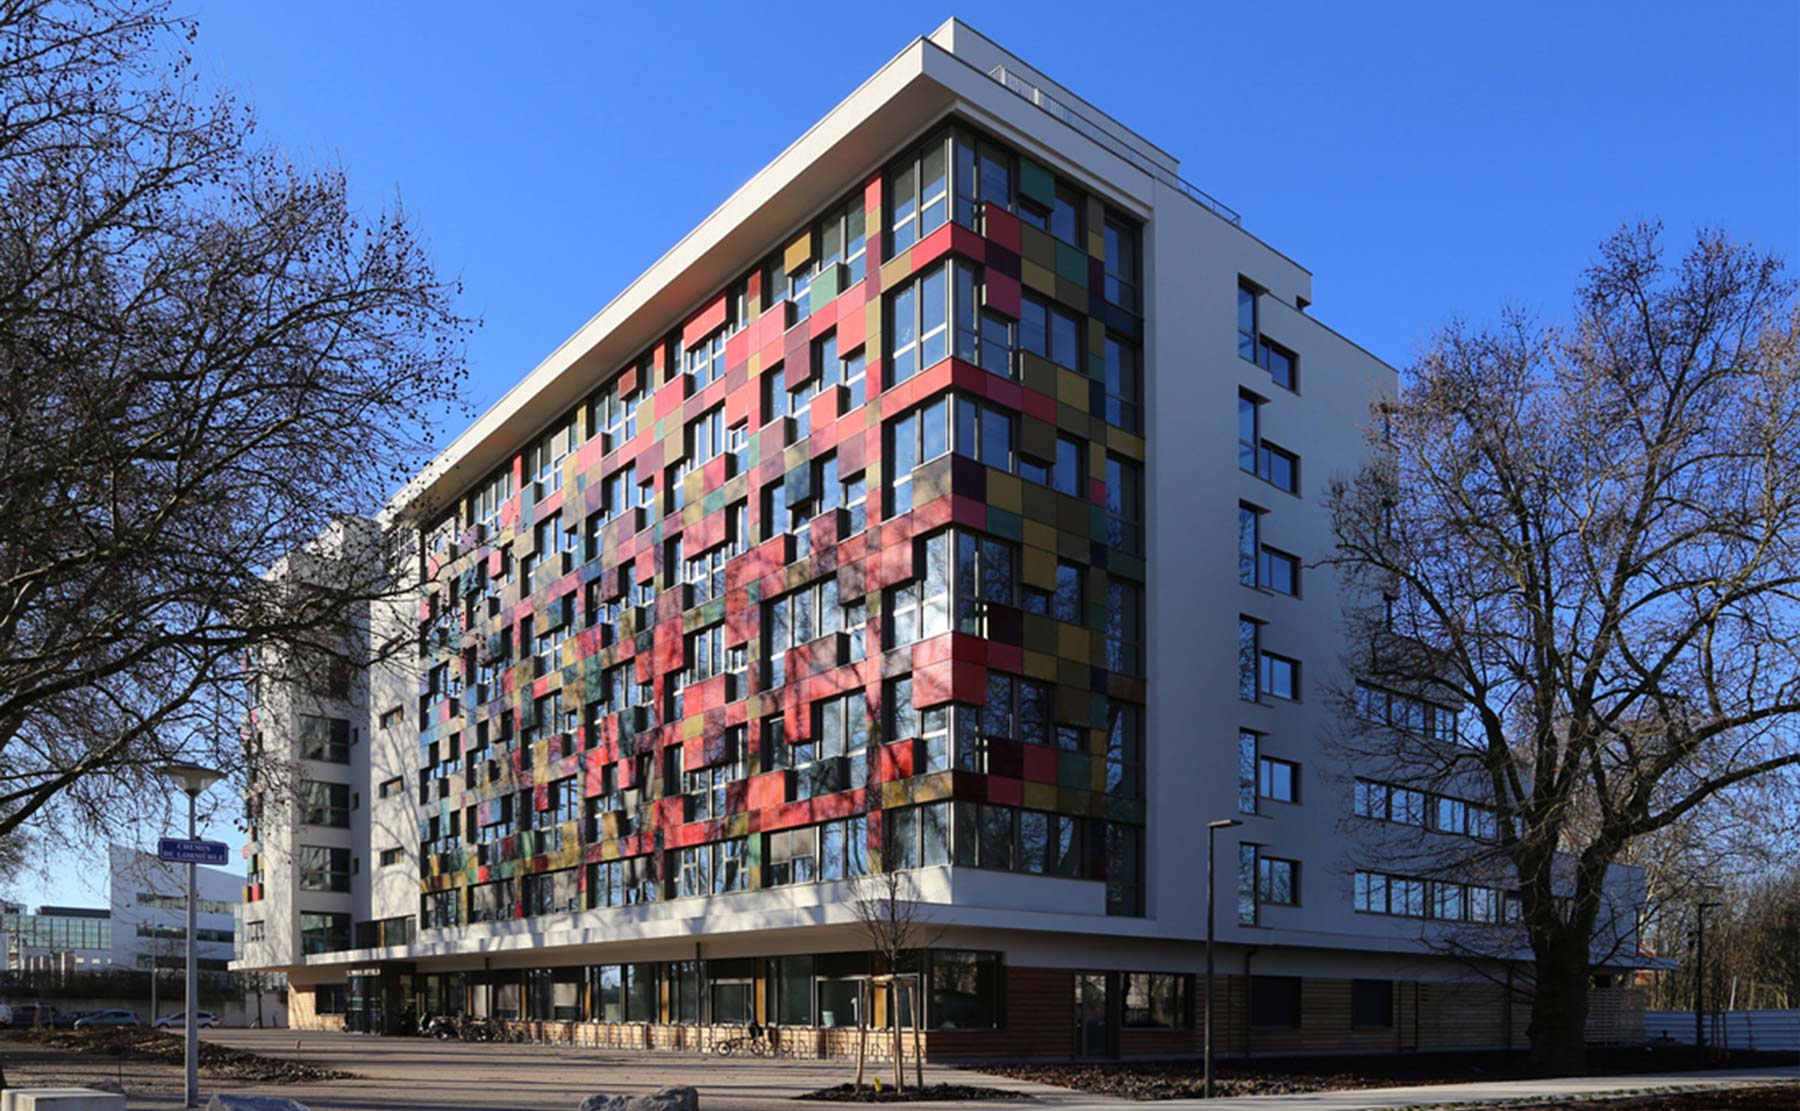 Vue générale - Siège de C.U.S. Habitat et d'Habitation Moderne / Strasbourg